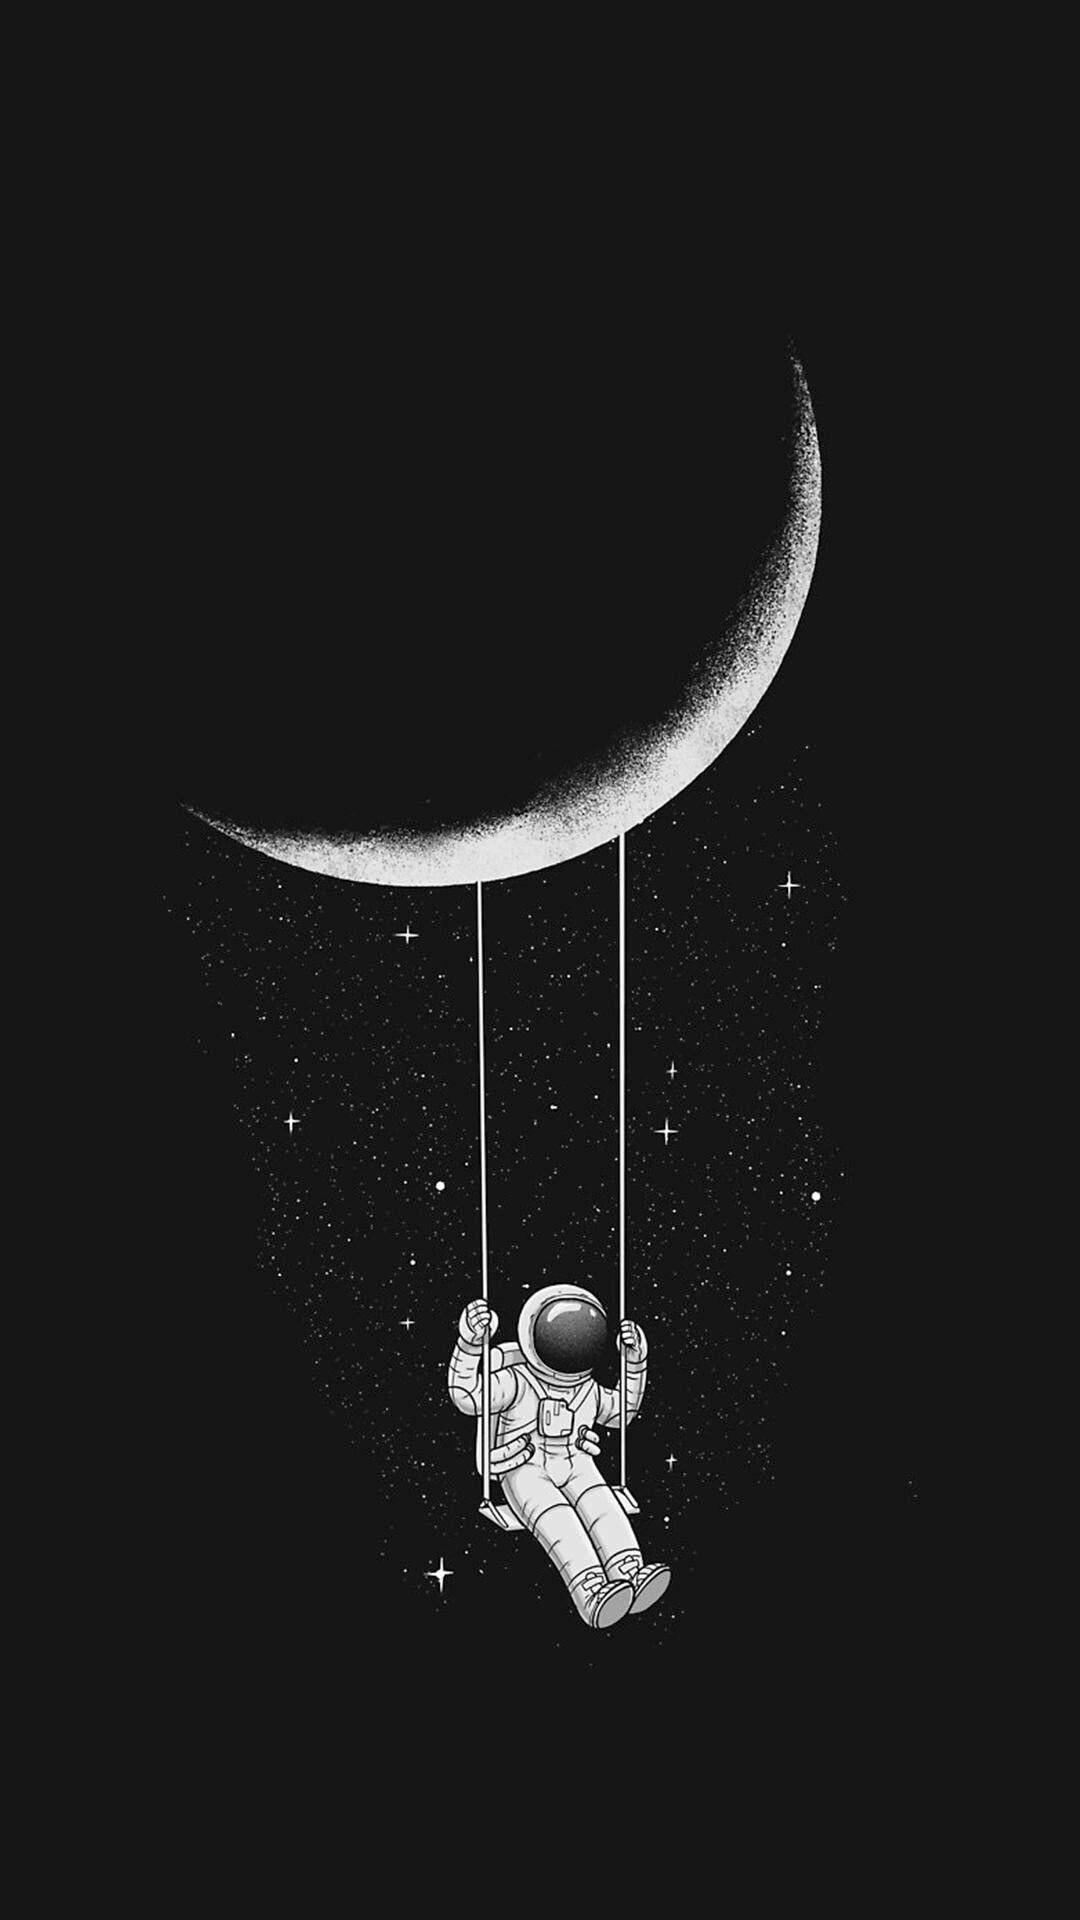 Astronaut Aesthetic Swinging On Crescent Moon Wallpaper